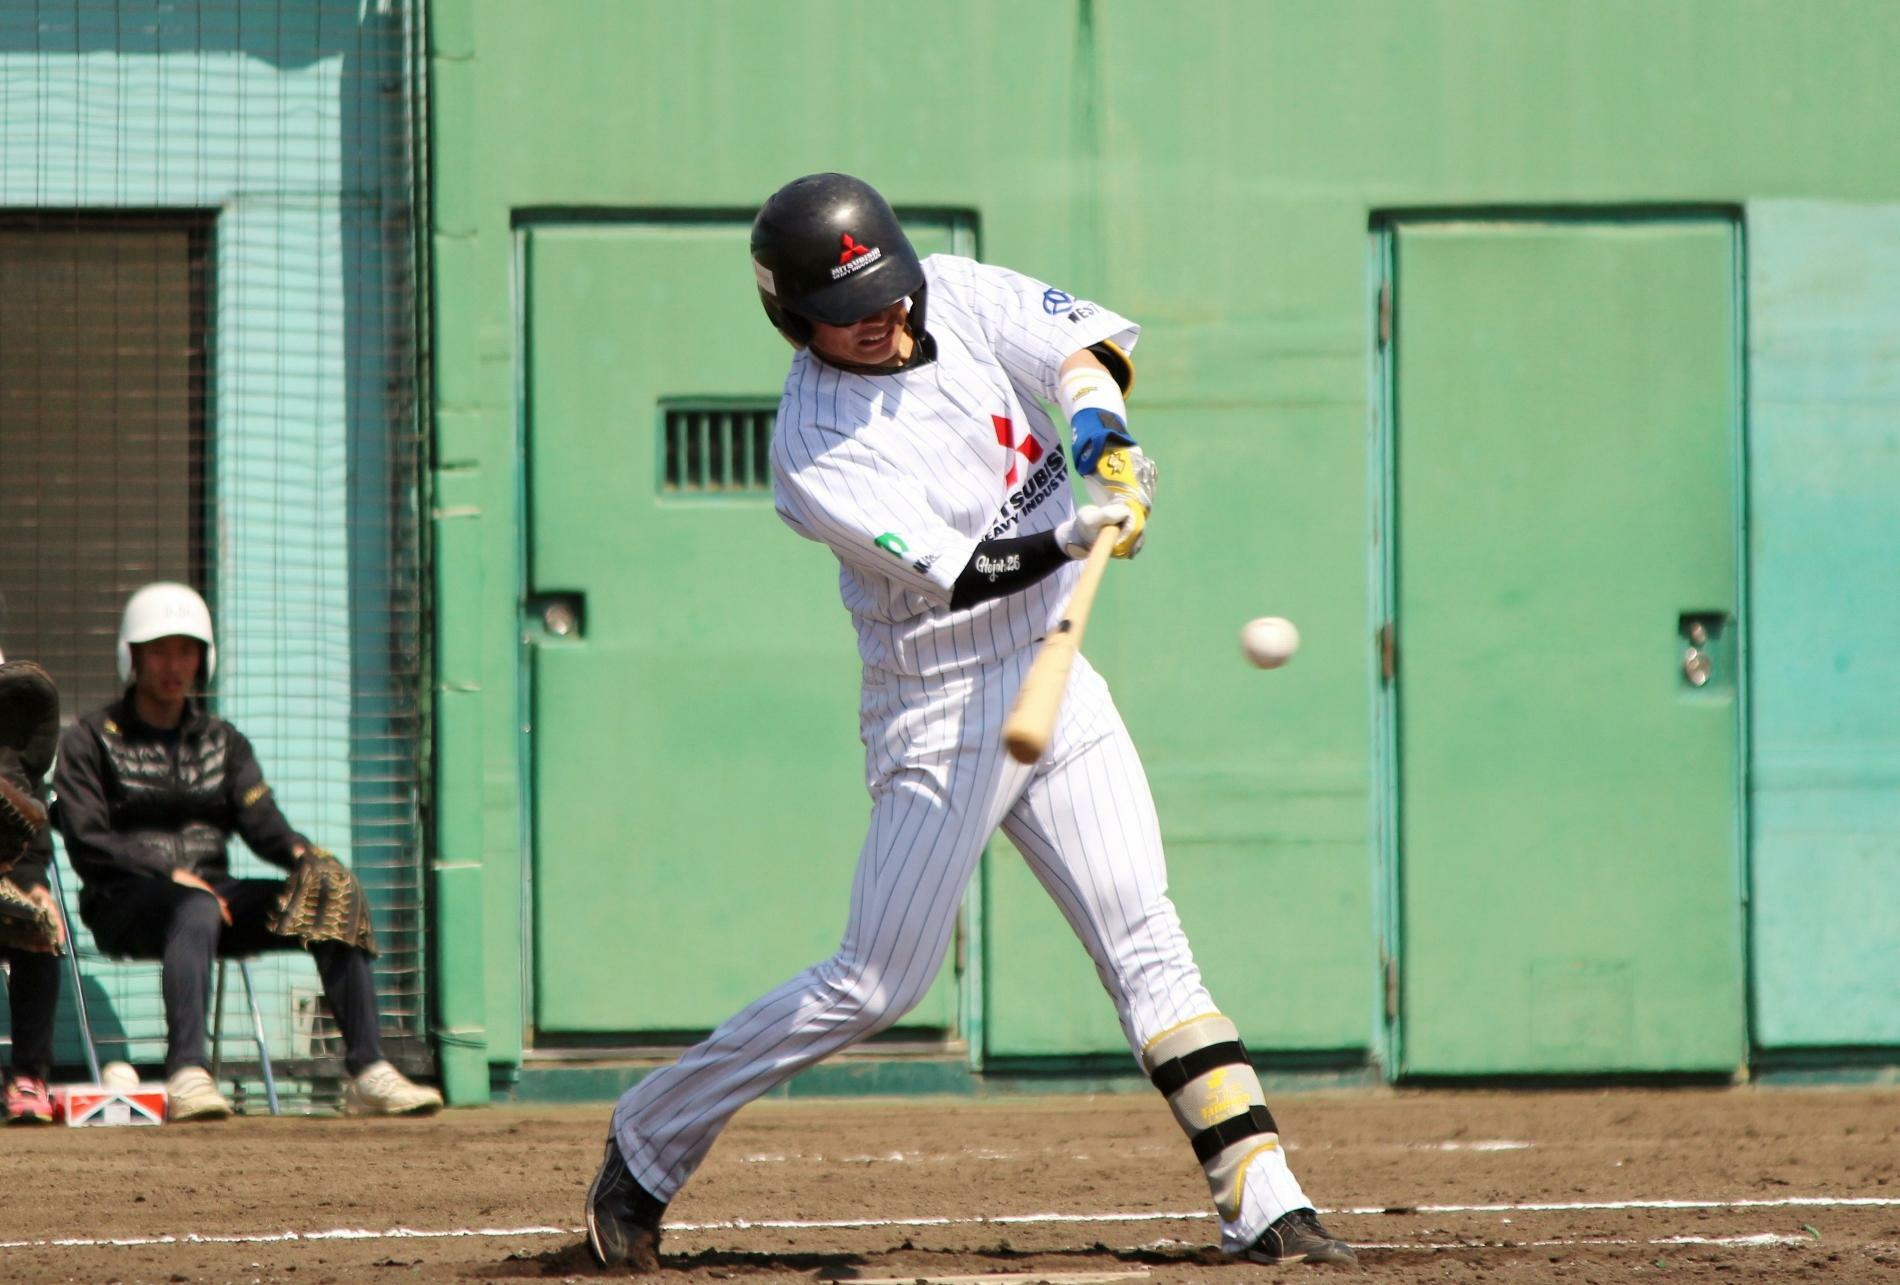 JABA岡山大会の初戦(対四国銀行)、1回に犠飛で打点を挙げた北條選手は、写真の3回にも左前打でチャンスを拡大します。